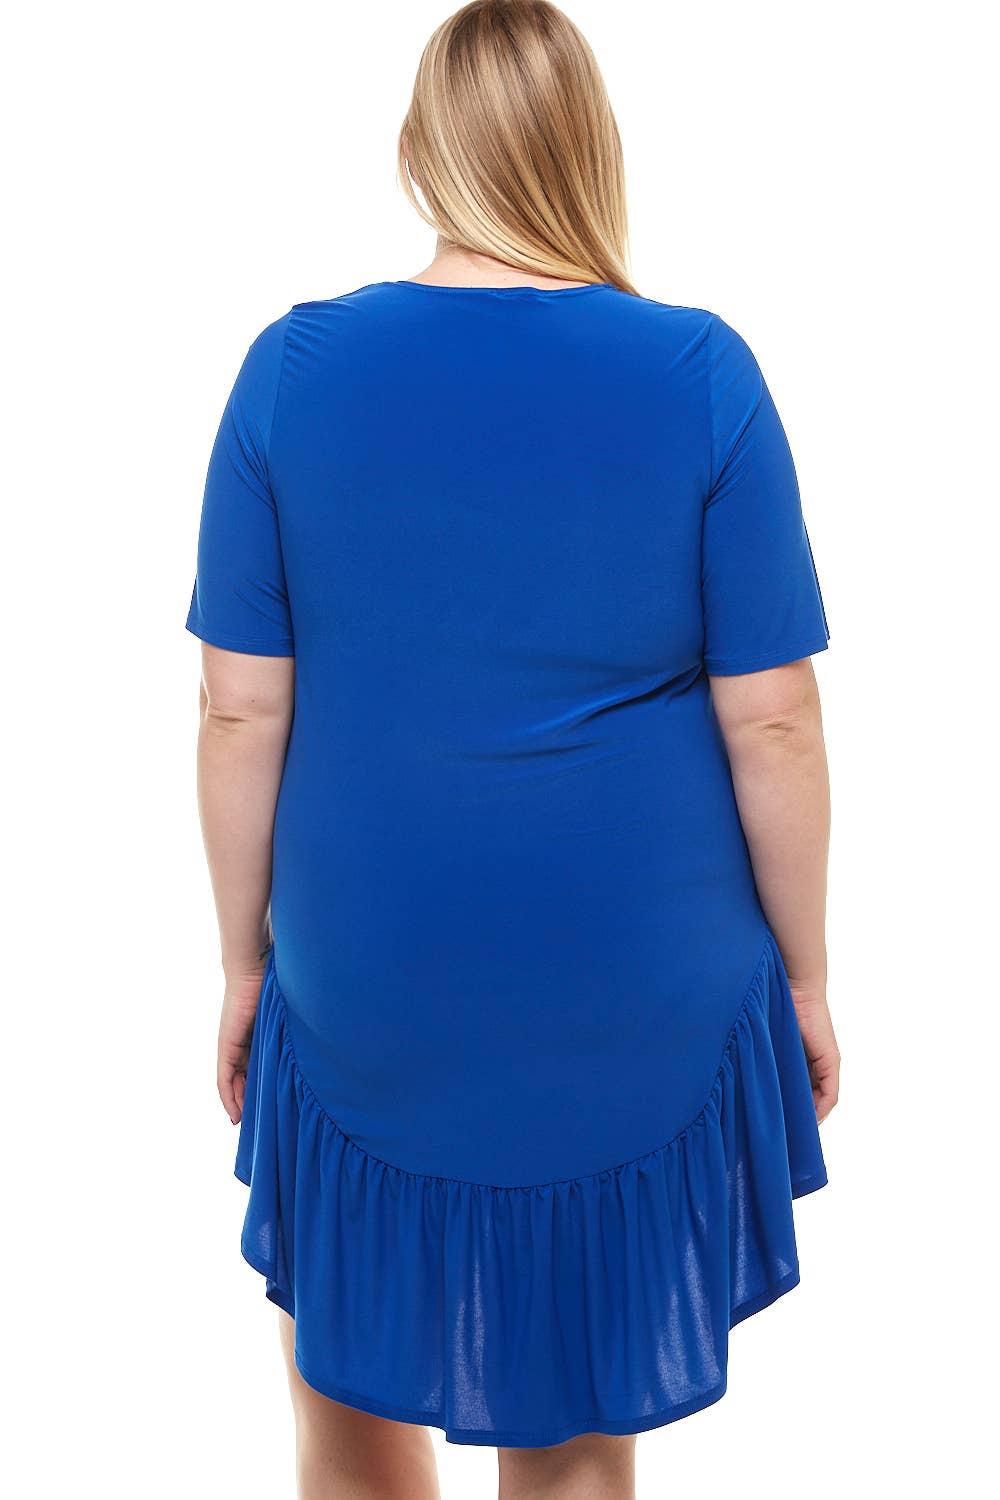 ADS-8265PSX Plus Size Mini Dress with Ruffle Hem | Made in USA | Azules Wholesale